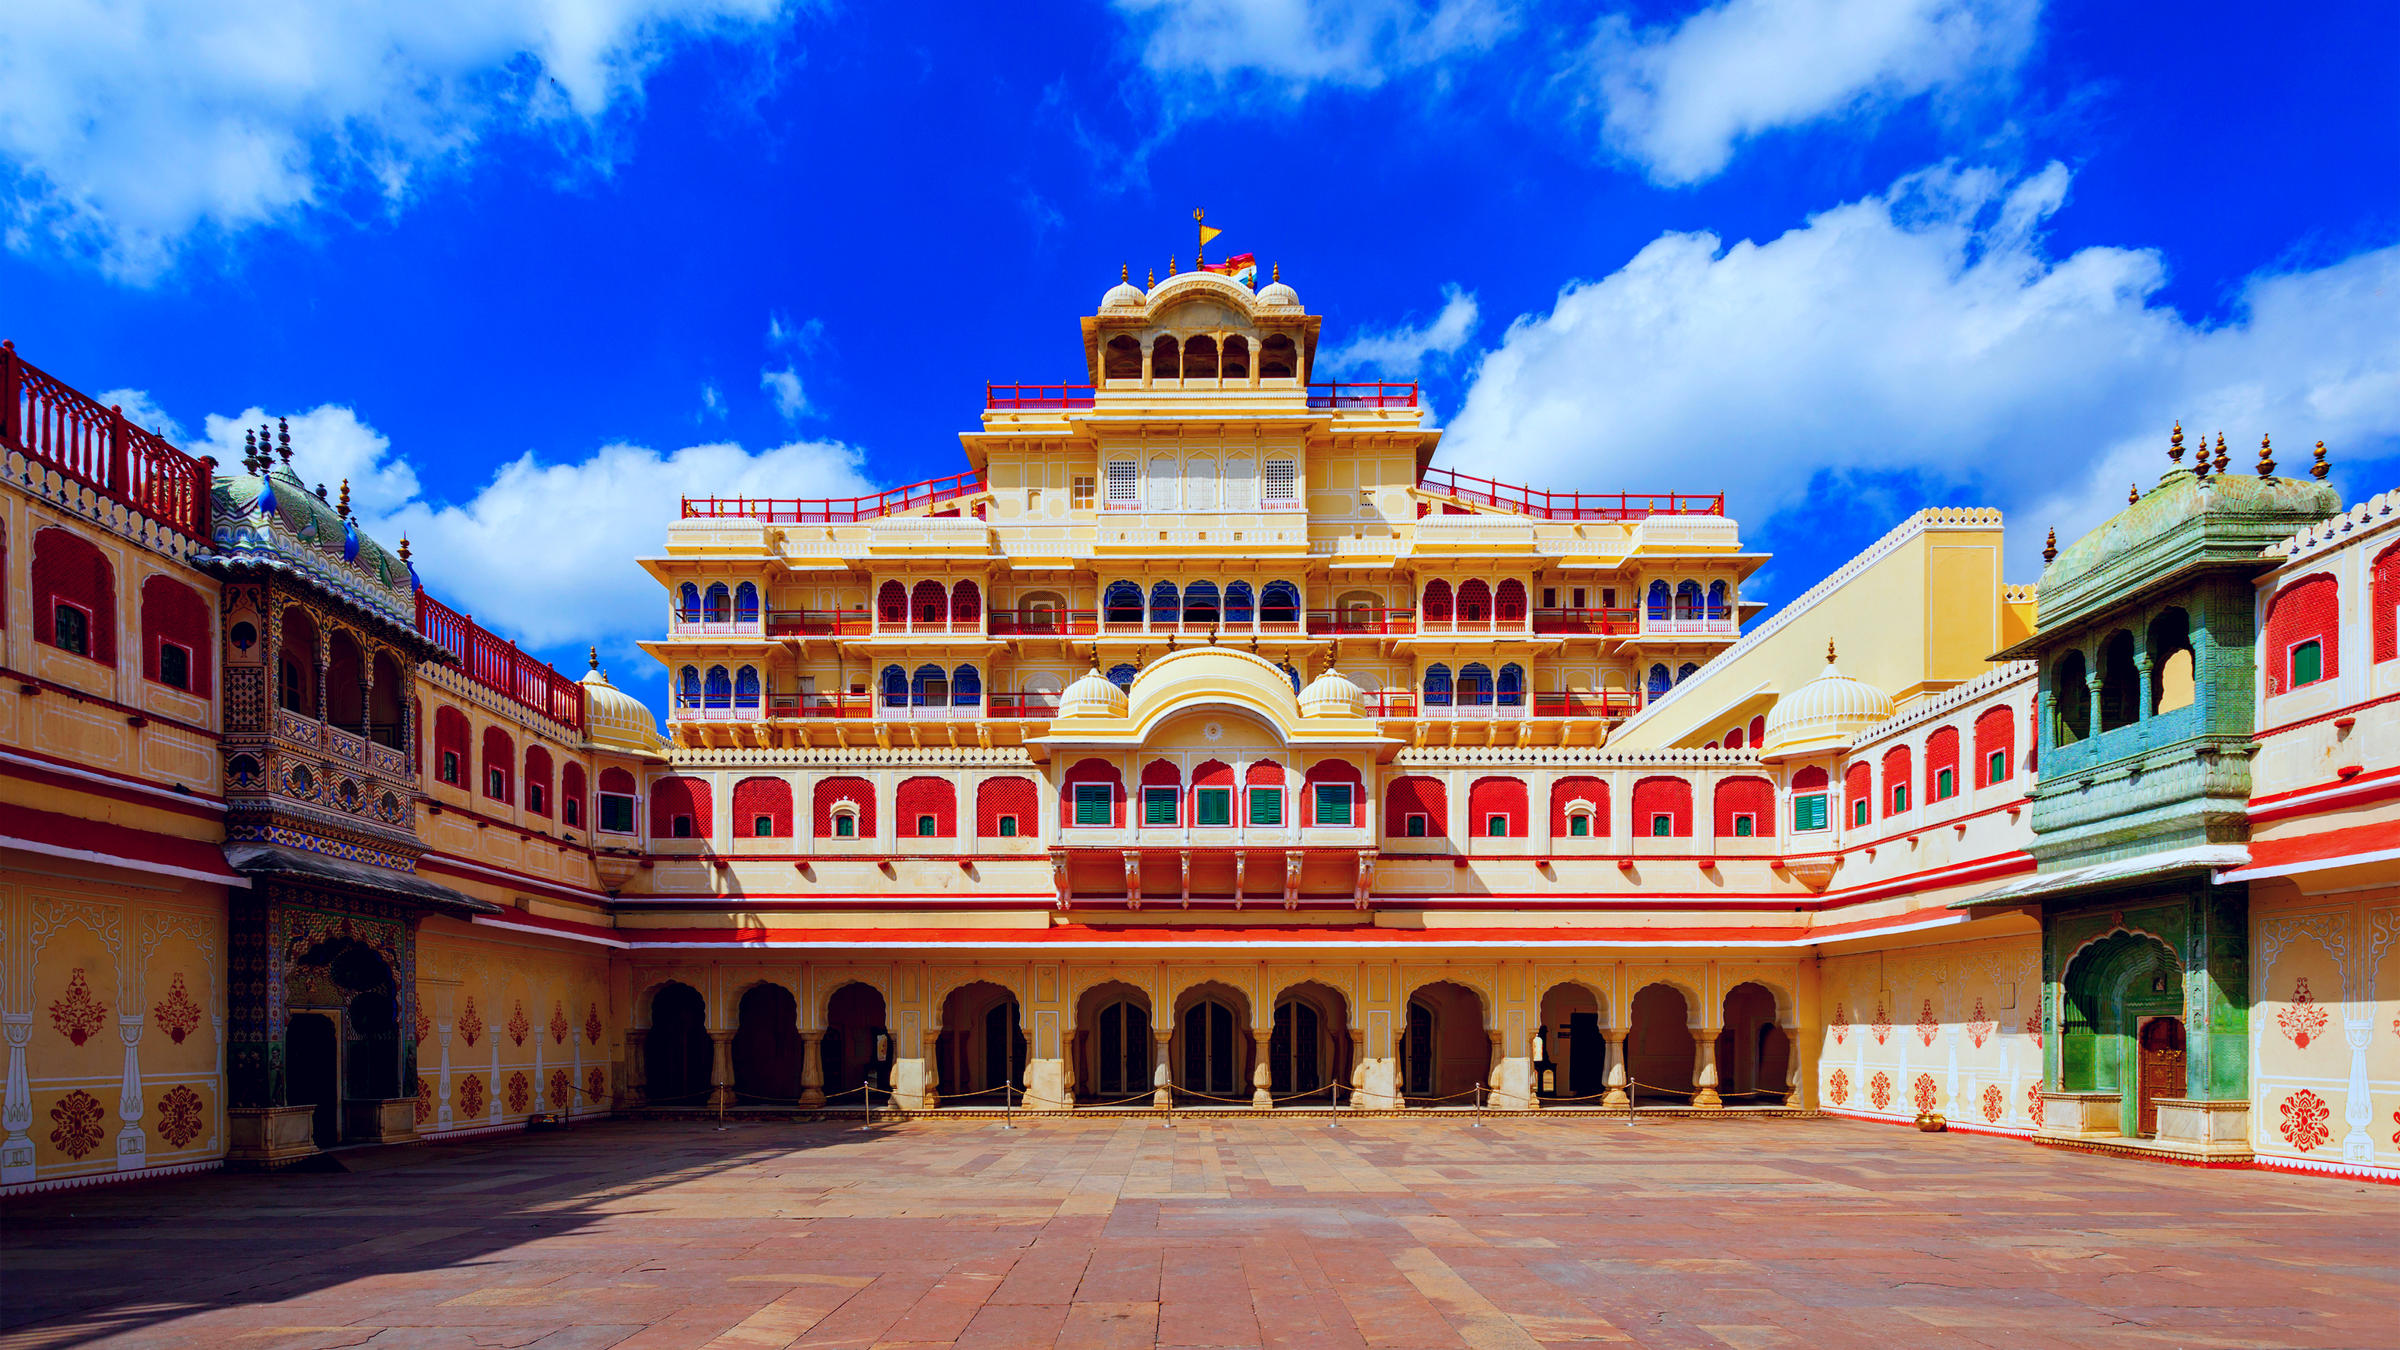 Chandra Mahal palace